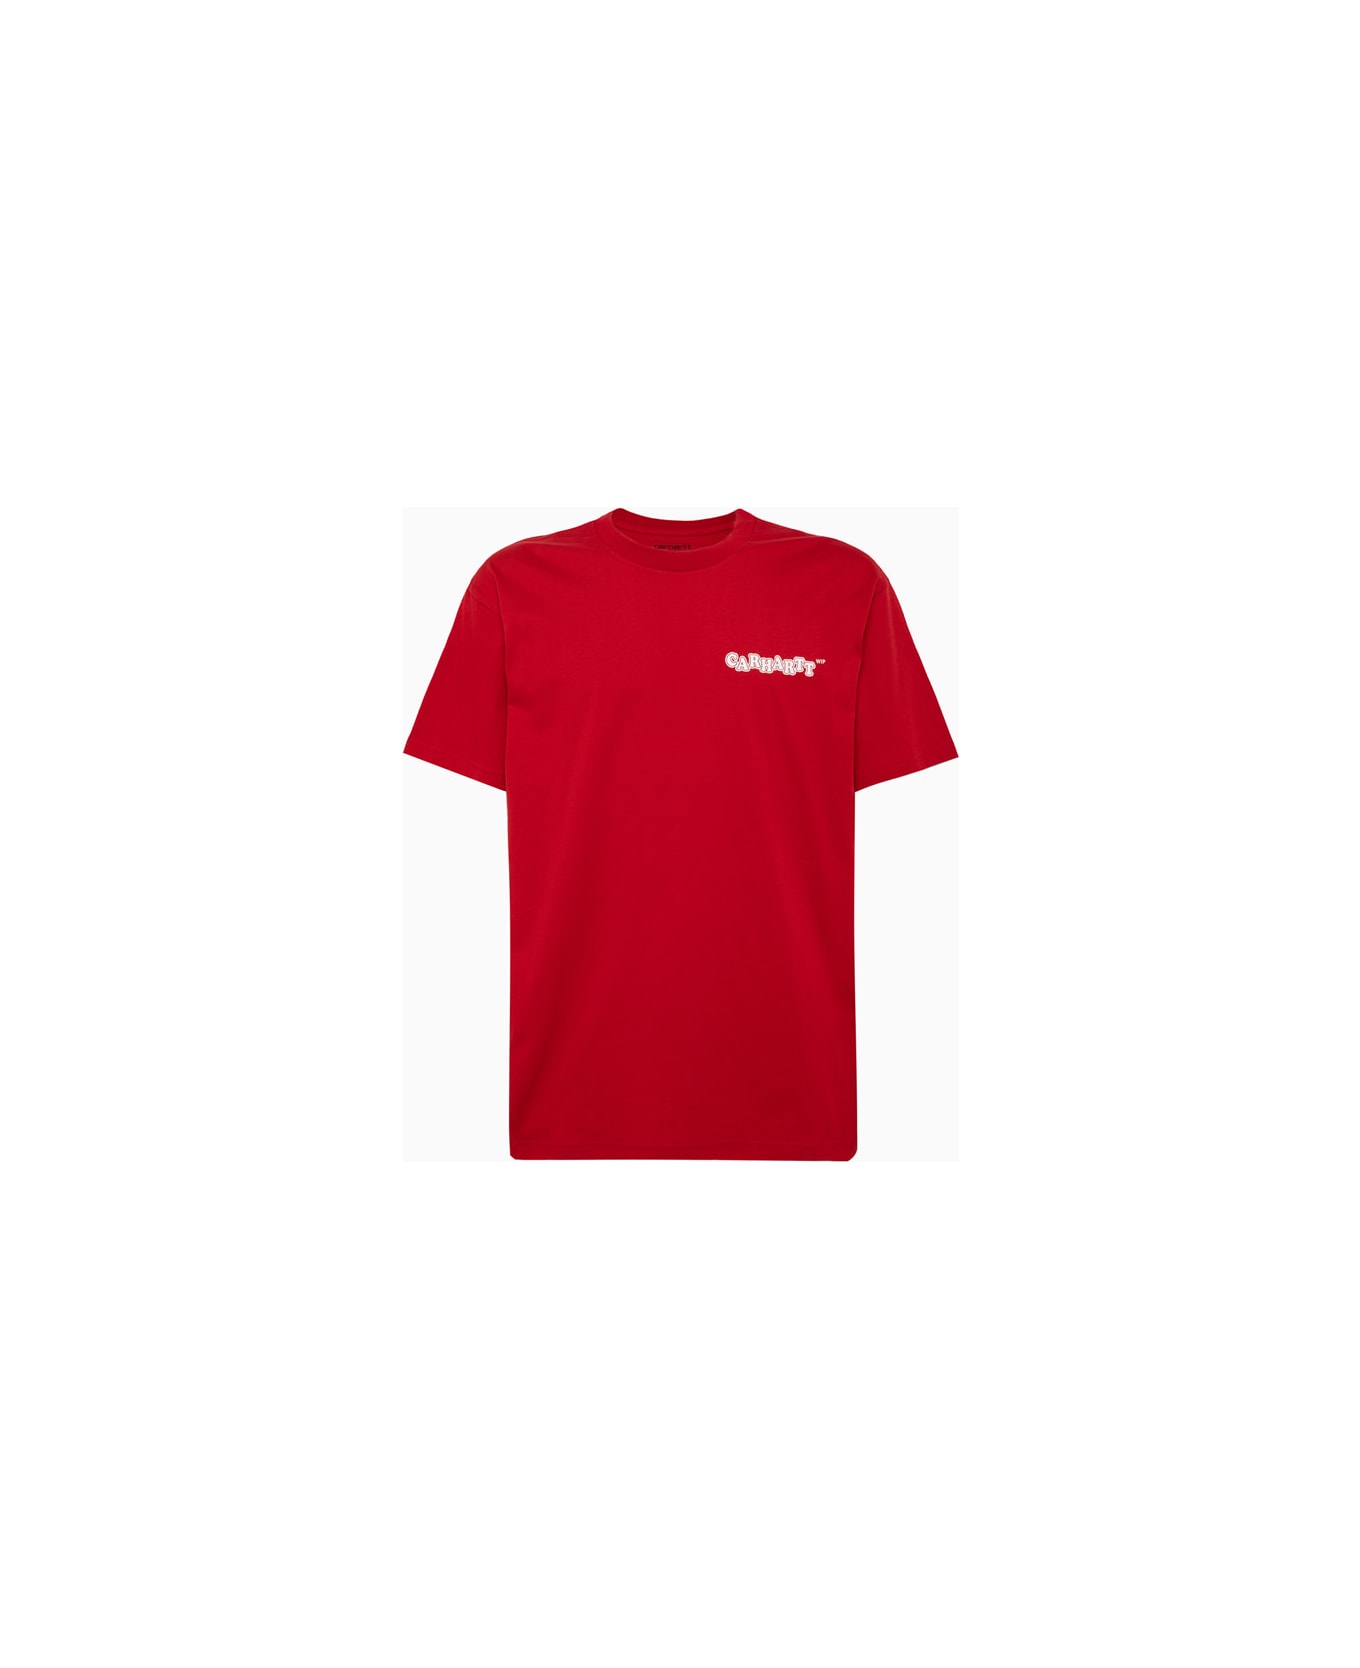 Carhartt WIP Wip Fast Food T-shirt - Red シャツ